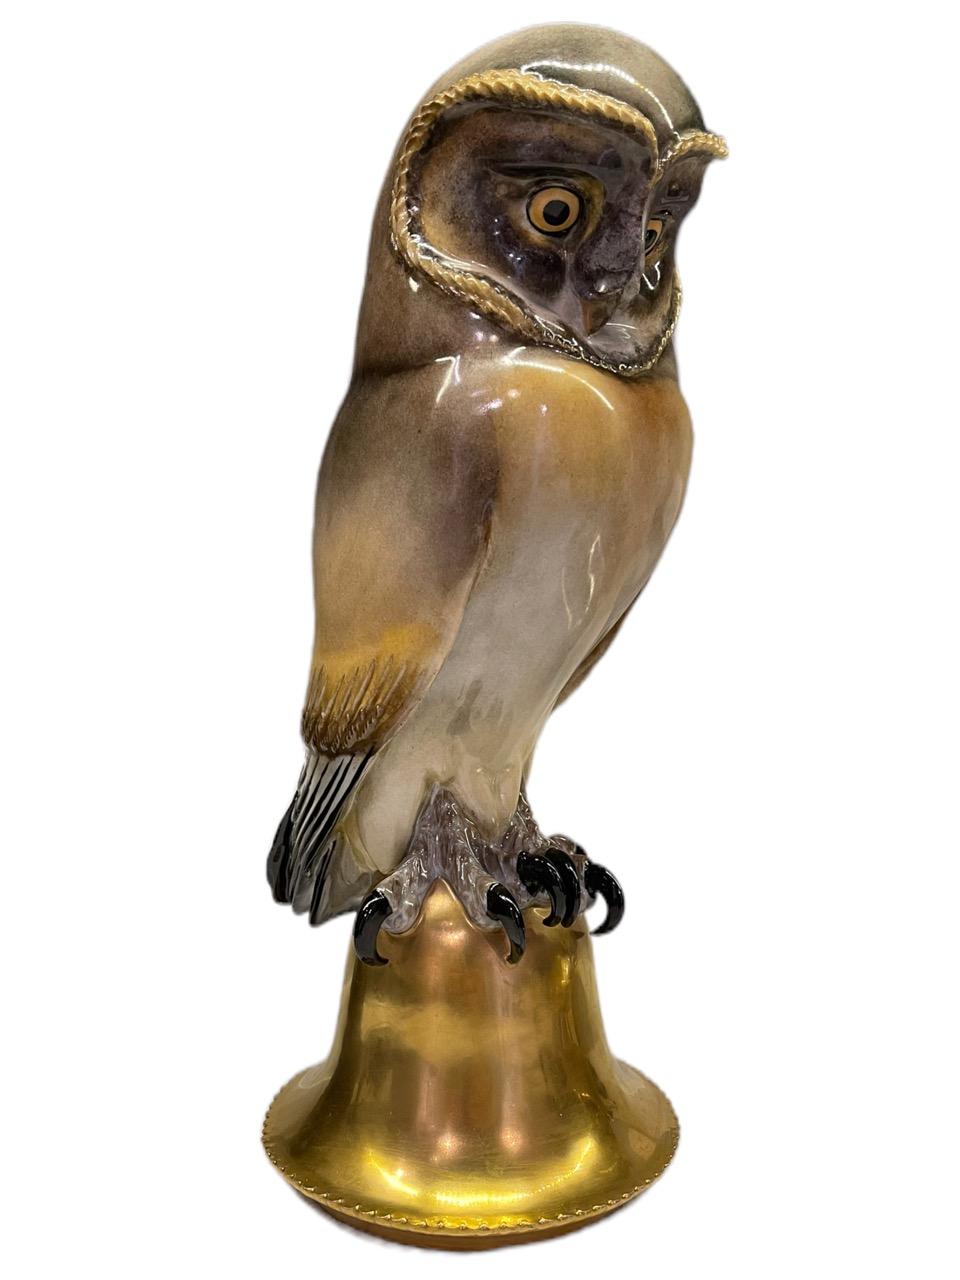 19th Century German Porcelain Owl Figure, by Meissen 1